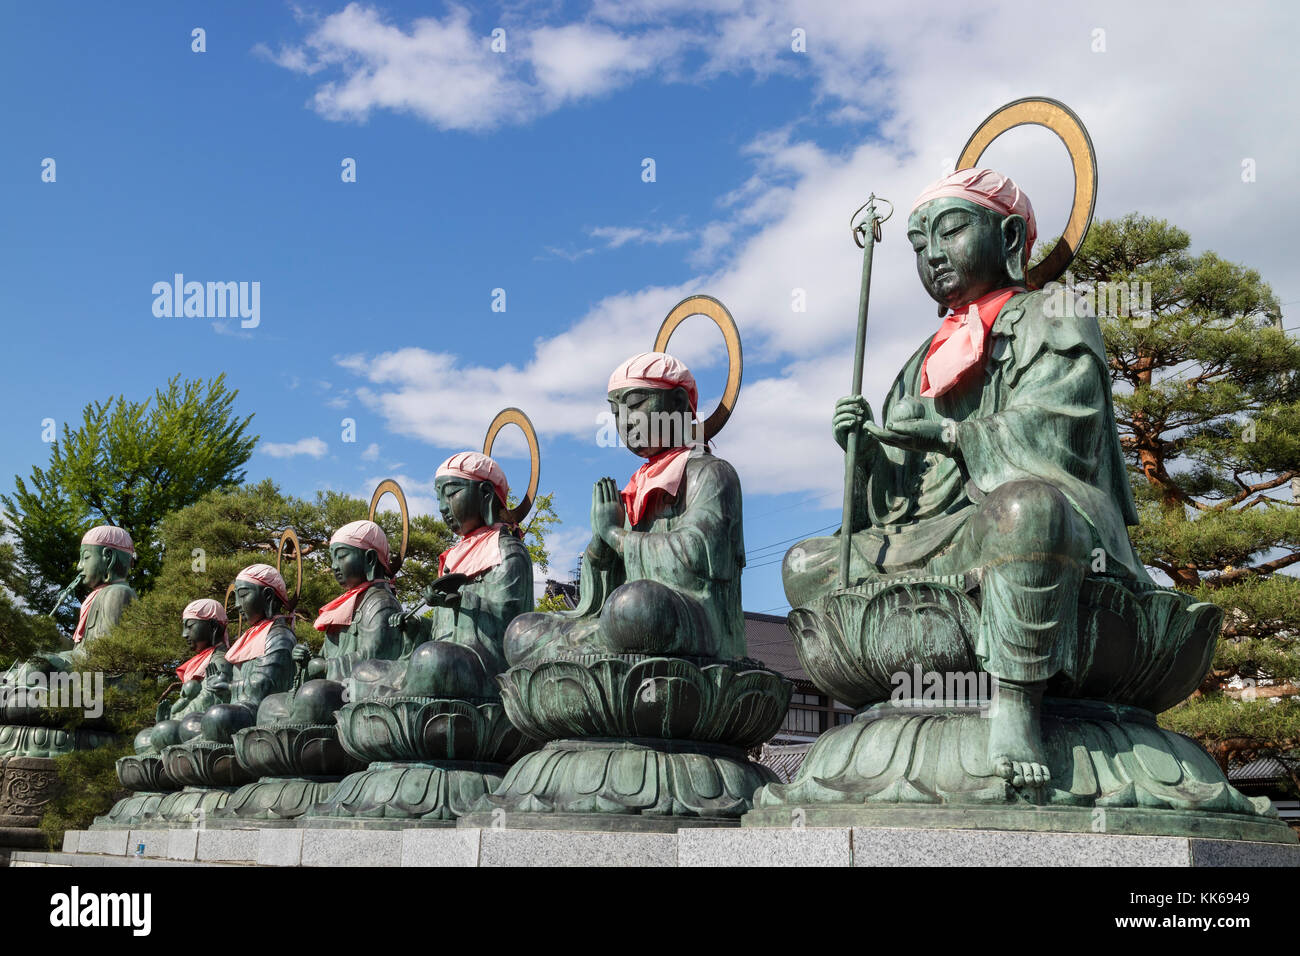 Nagano, Japan, Juni 3, 2017: Sechs bronze Buddha Statuen mit red Bibs und Motorhauben rokujizo genannt, oder 6 jizo, Zenkoji Tempel, Nagano Stockfoto